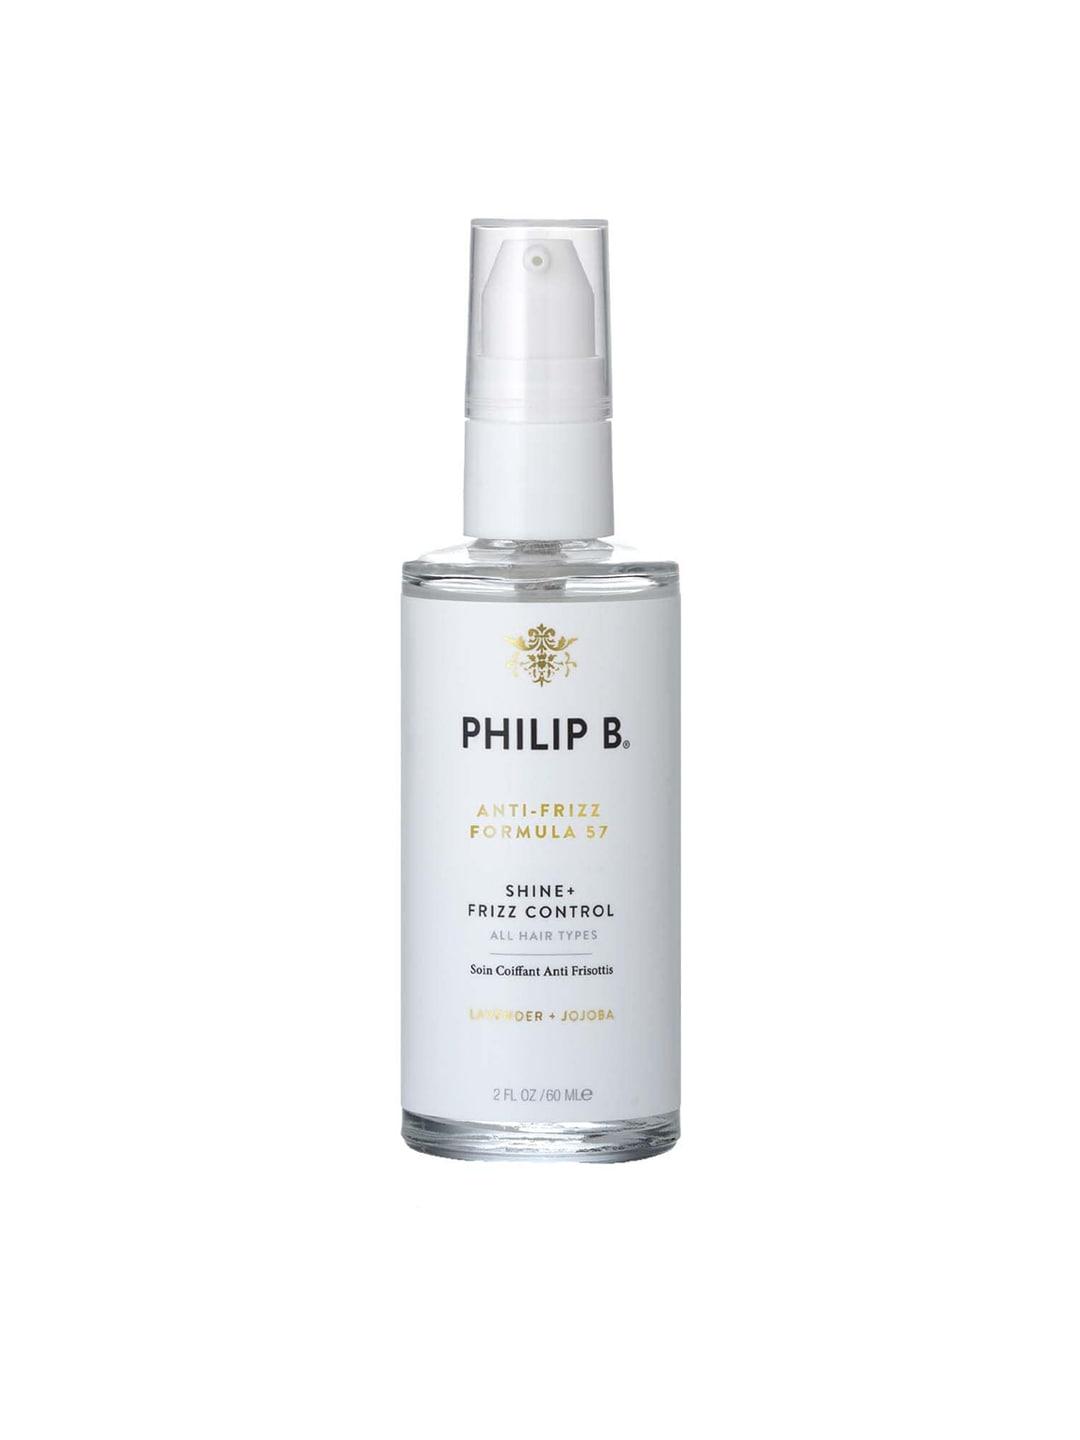 philip b anti-frizz formula 57 shine + frizz control hair spray - 60ml